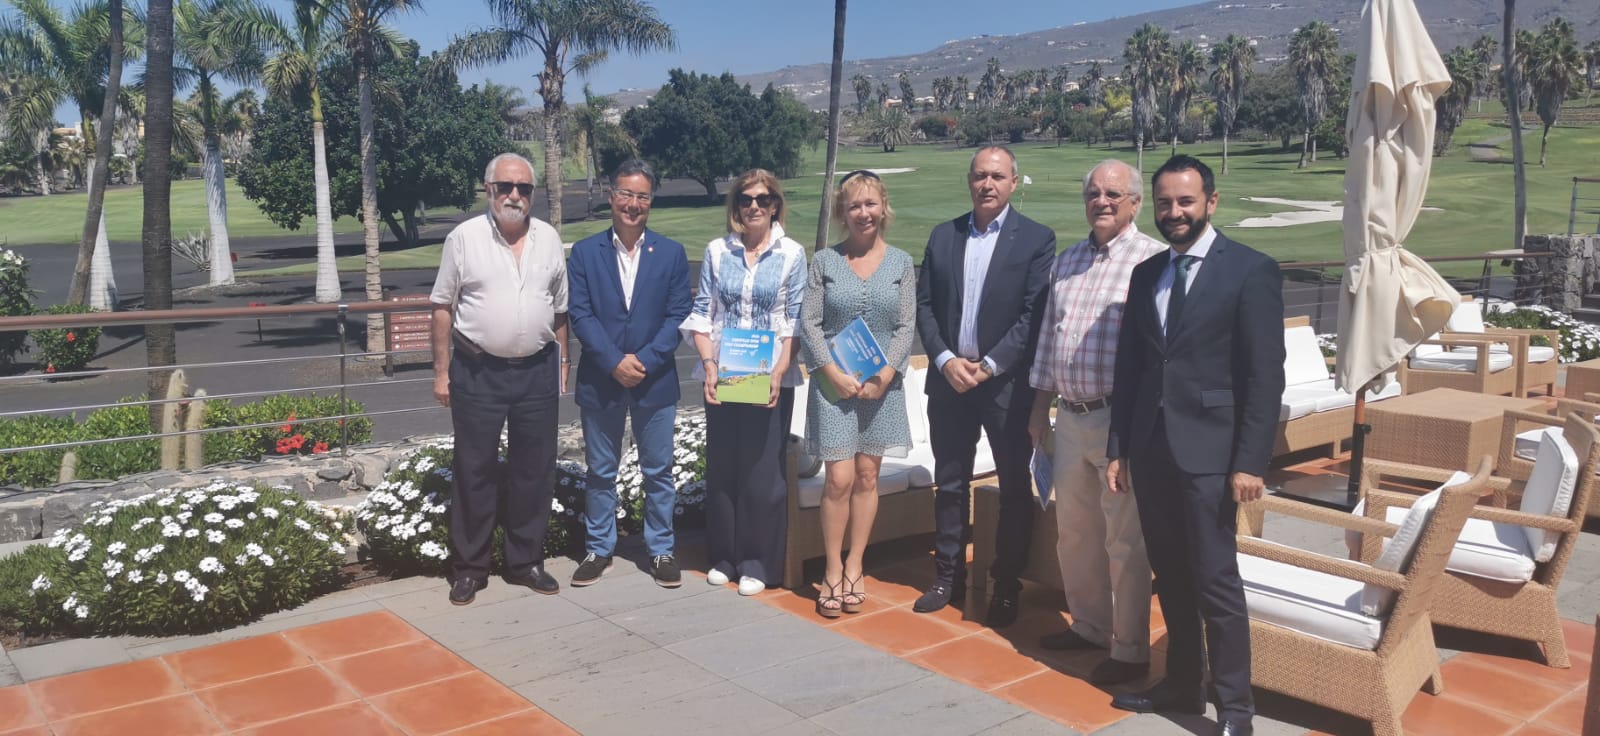 Reunión de presidentes de clubes rotarios de Tenerife en Adeje